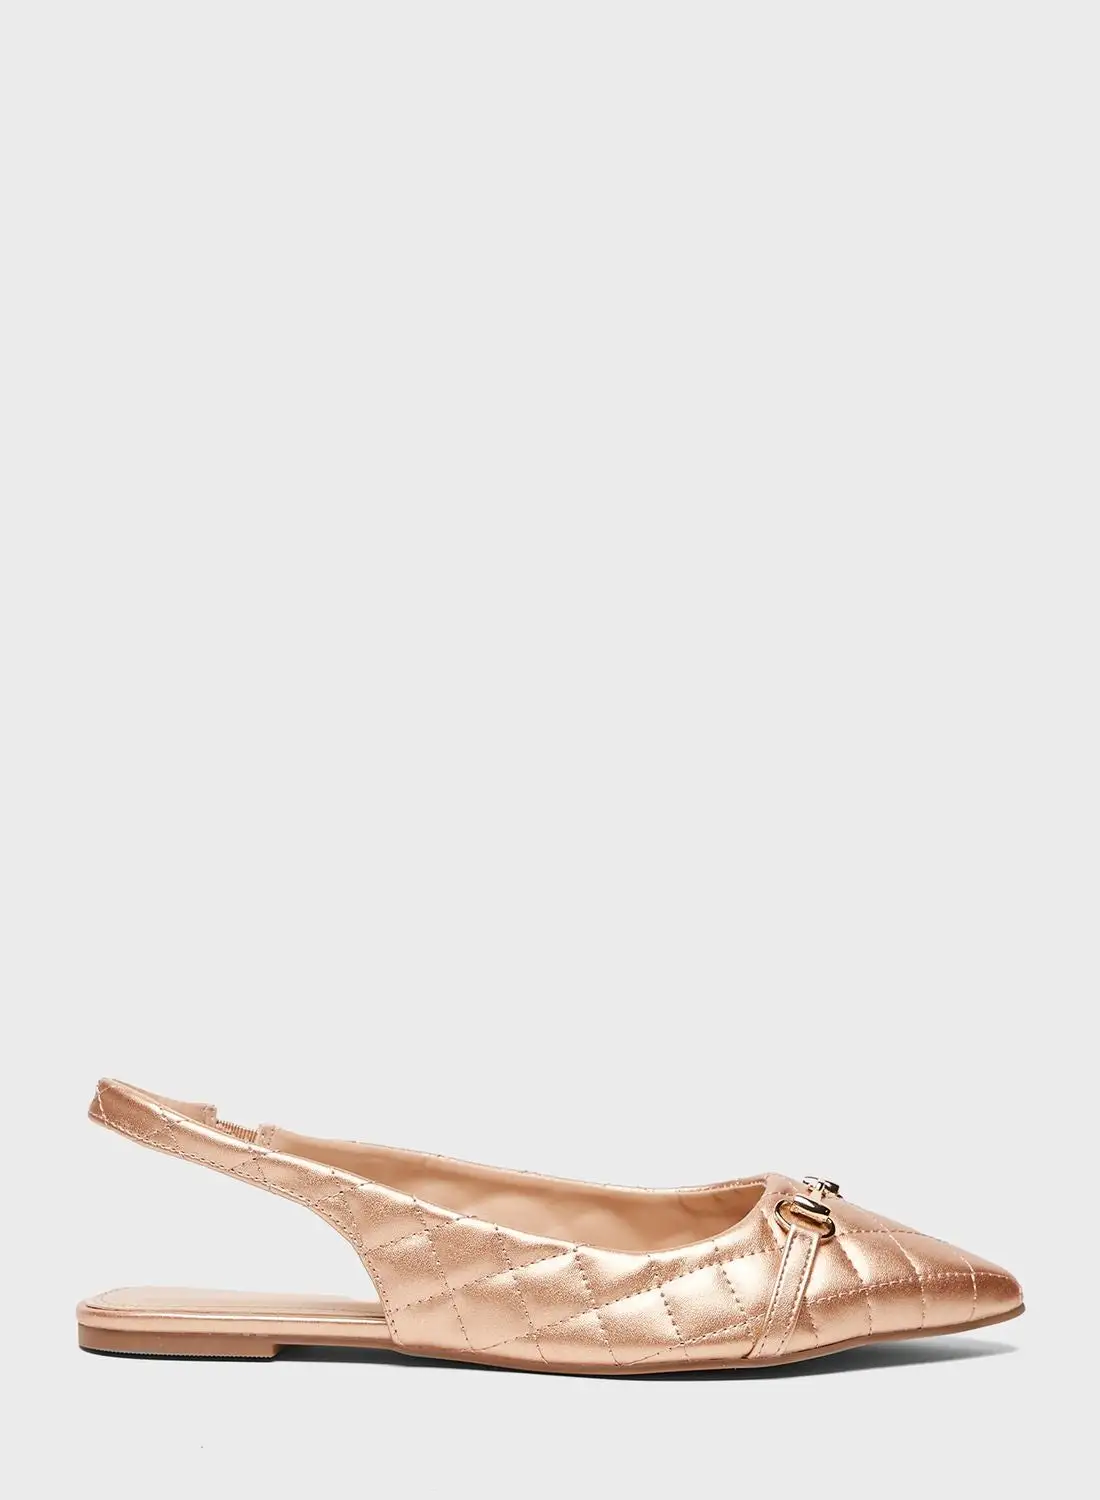 Celeste Pointed Toe Flat Ballerinas